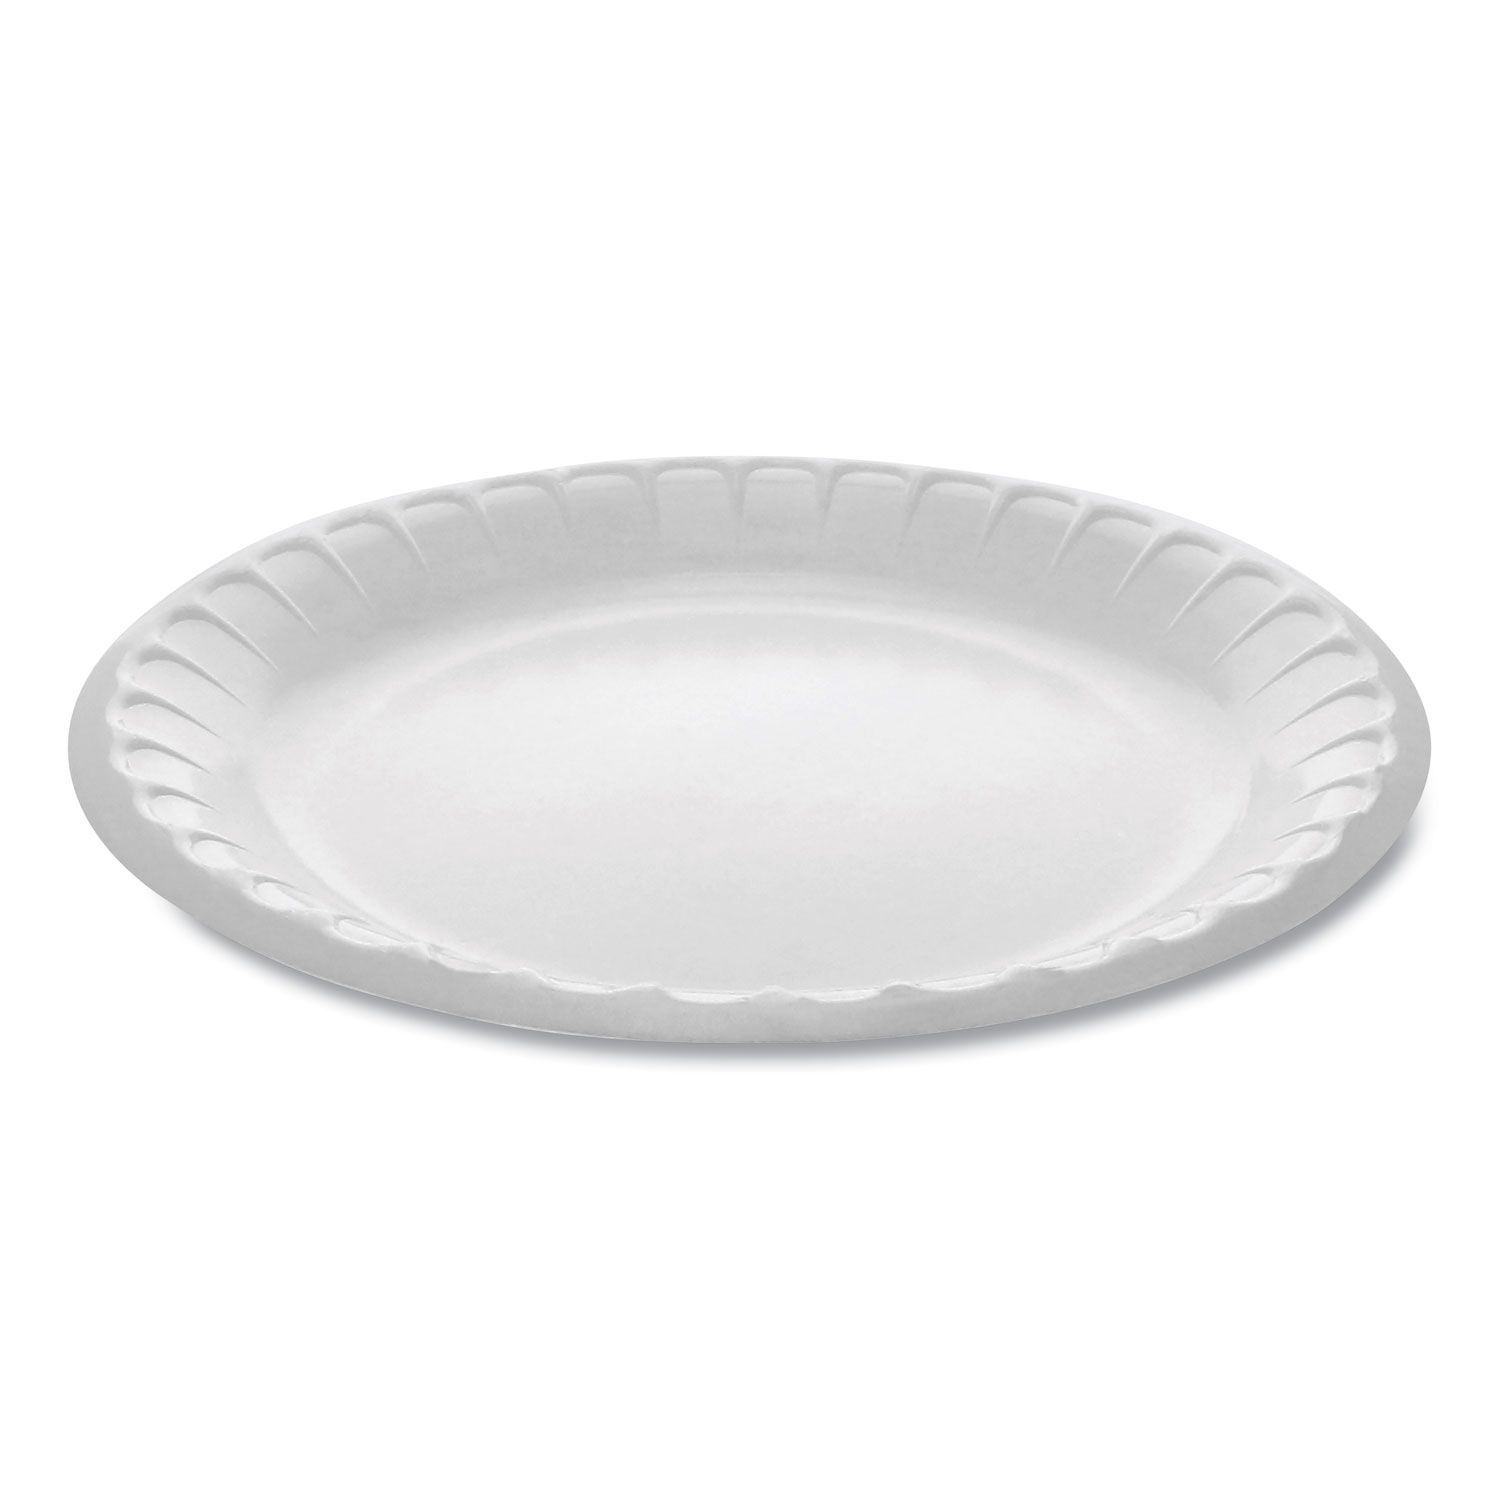 Pactiv Laminated Foam Dinnerware, Plate, 8.88 Diameter, White, 500/Carton